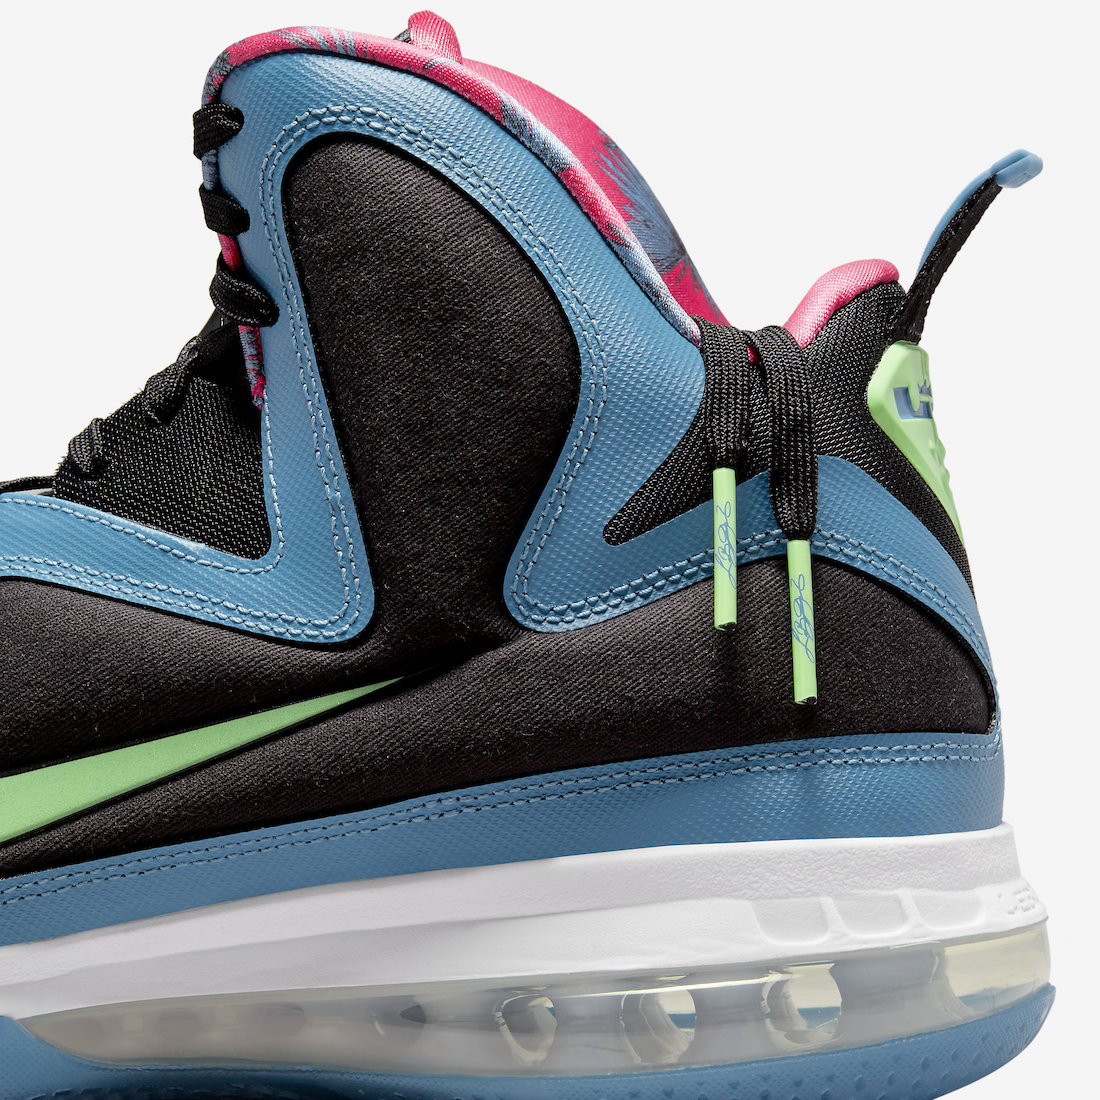 Nike-LeBron-9-South-Coast-DO5838-001-Release-Date-8